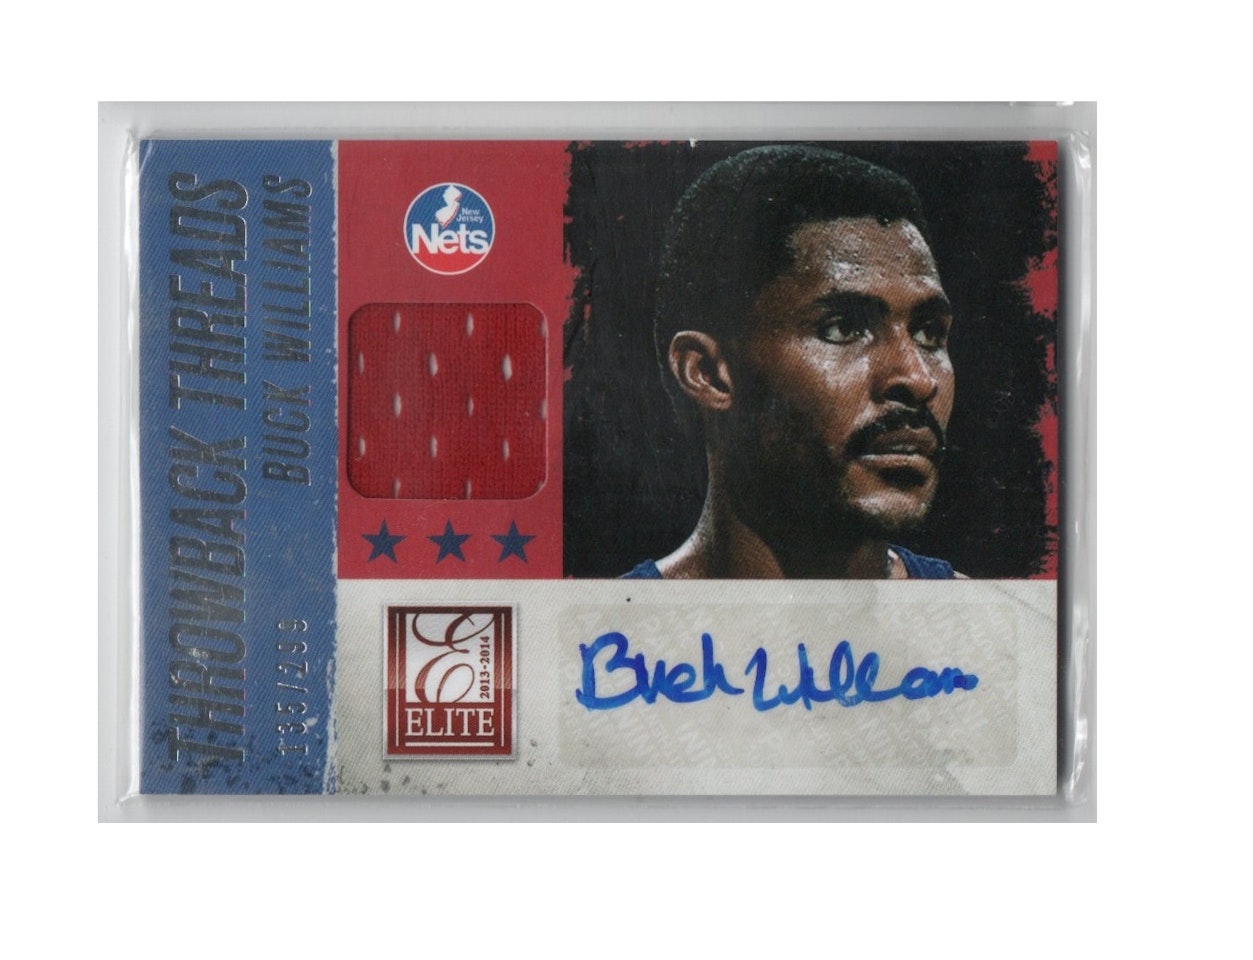 2013-14 Elite Throwback Threads Autographs #18 Buck Williams (60-X245-NBANETS)